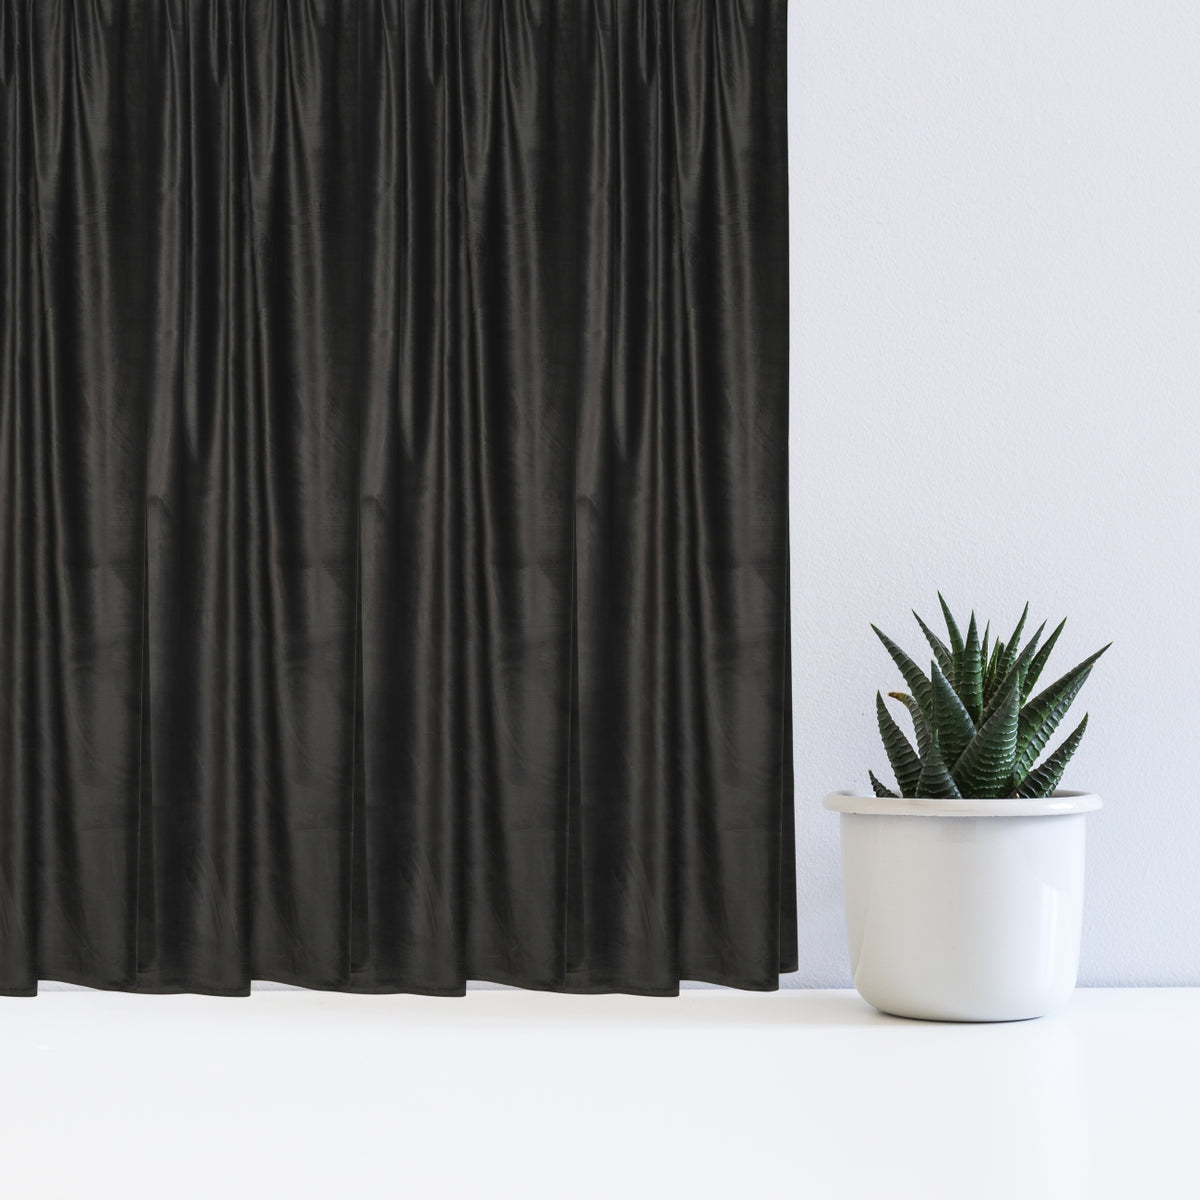 Night curtain dark brown Velvet